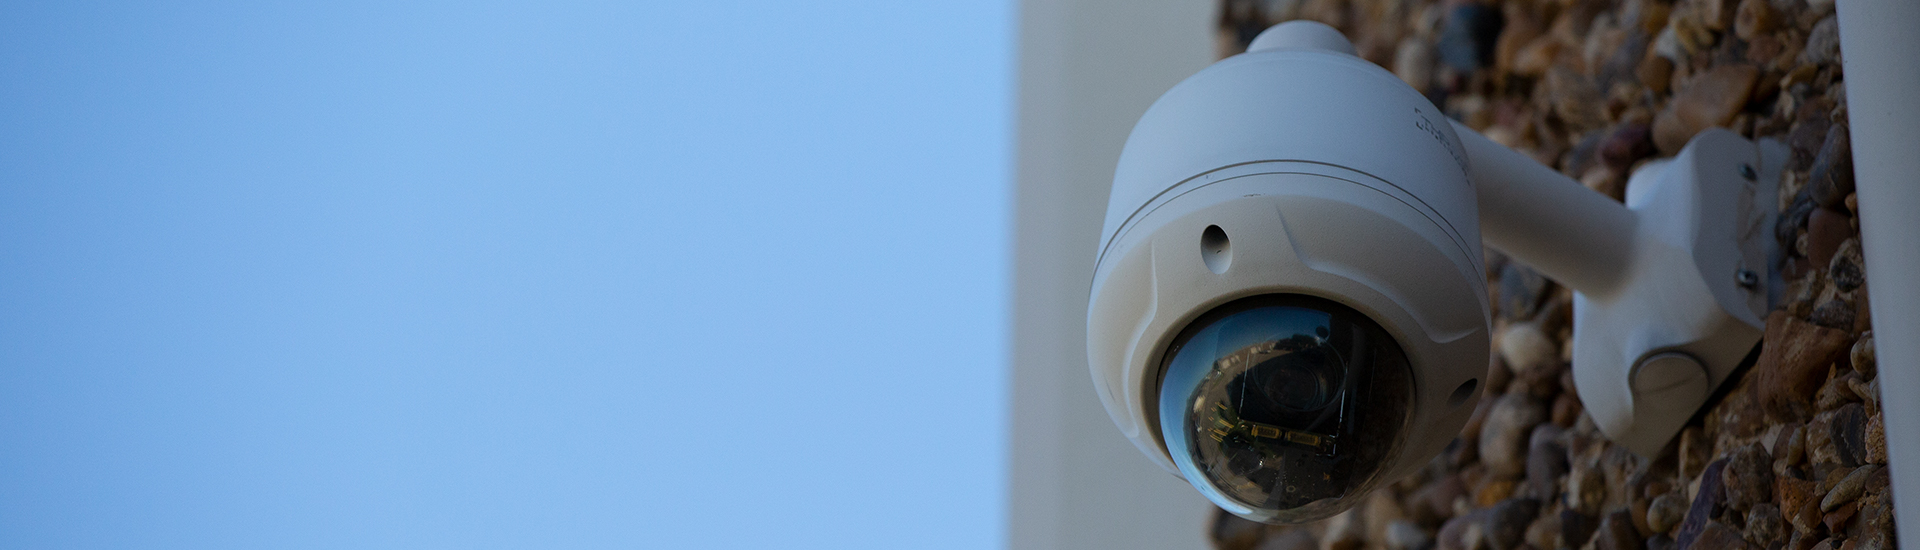 video surveillance camera on building